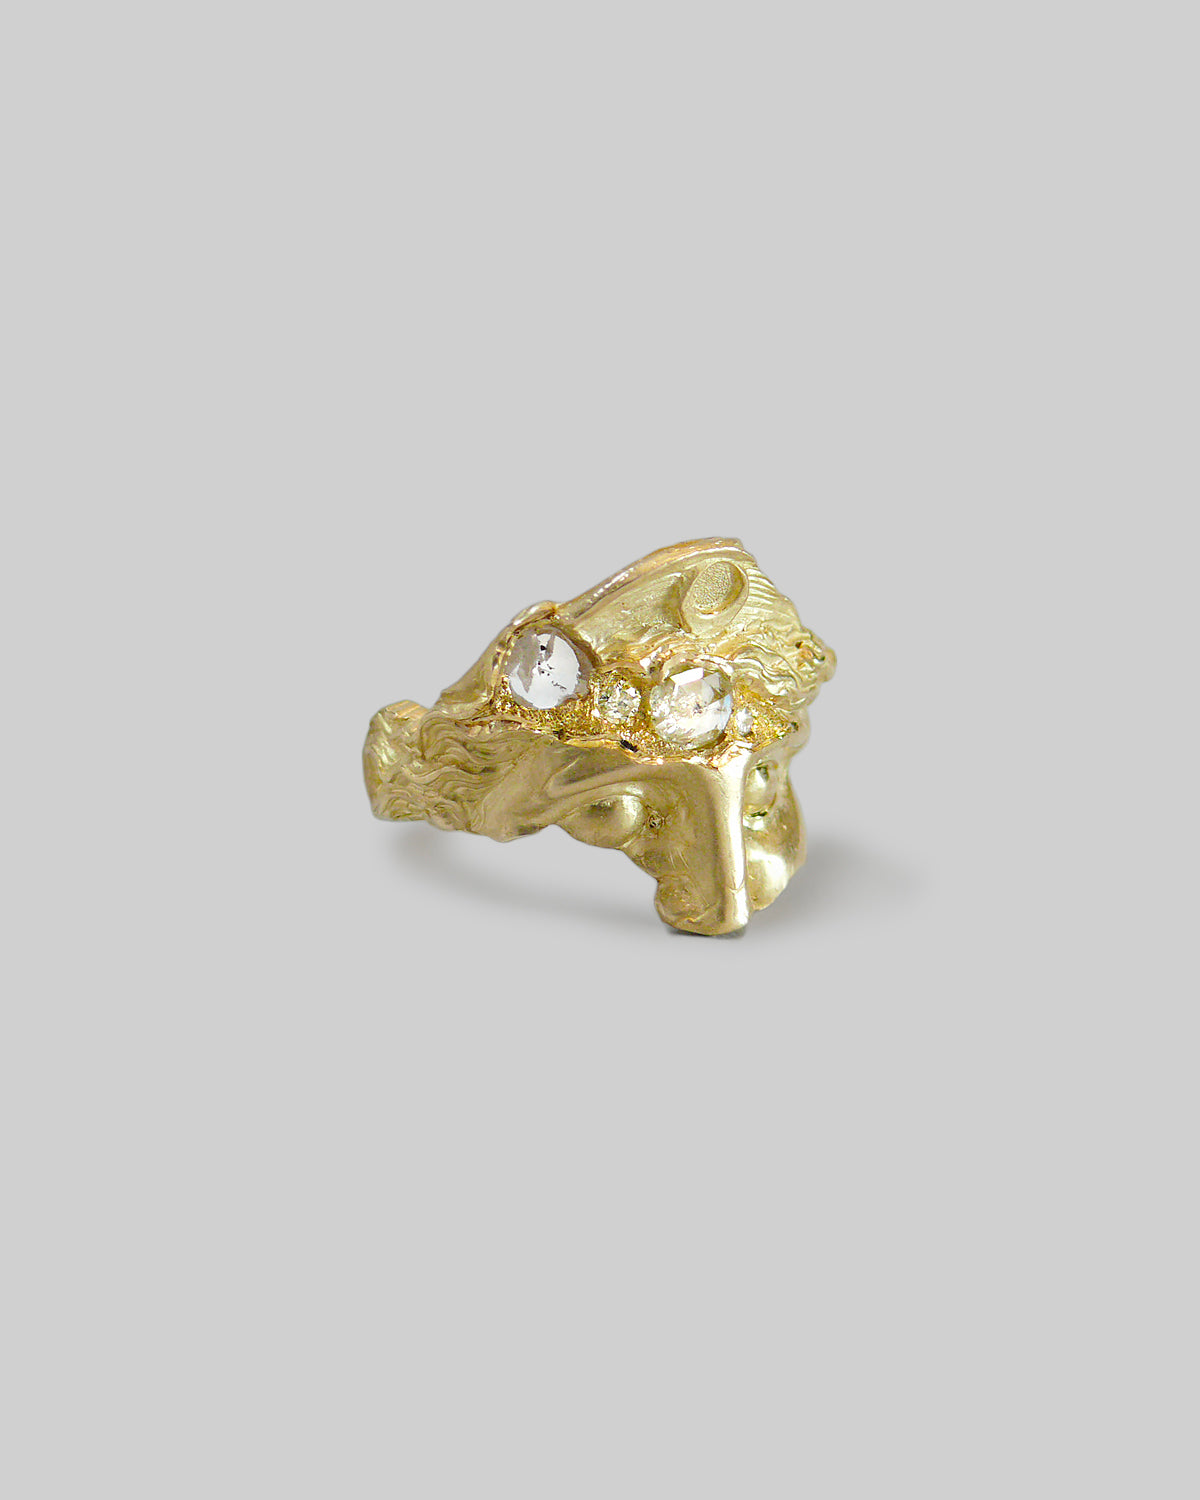 Artemide Ruin Ring 9kt Gold and Diamonds